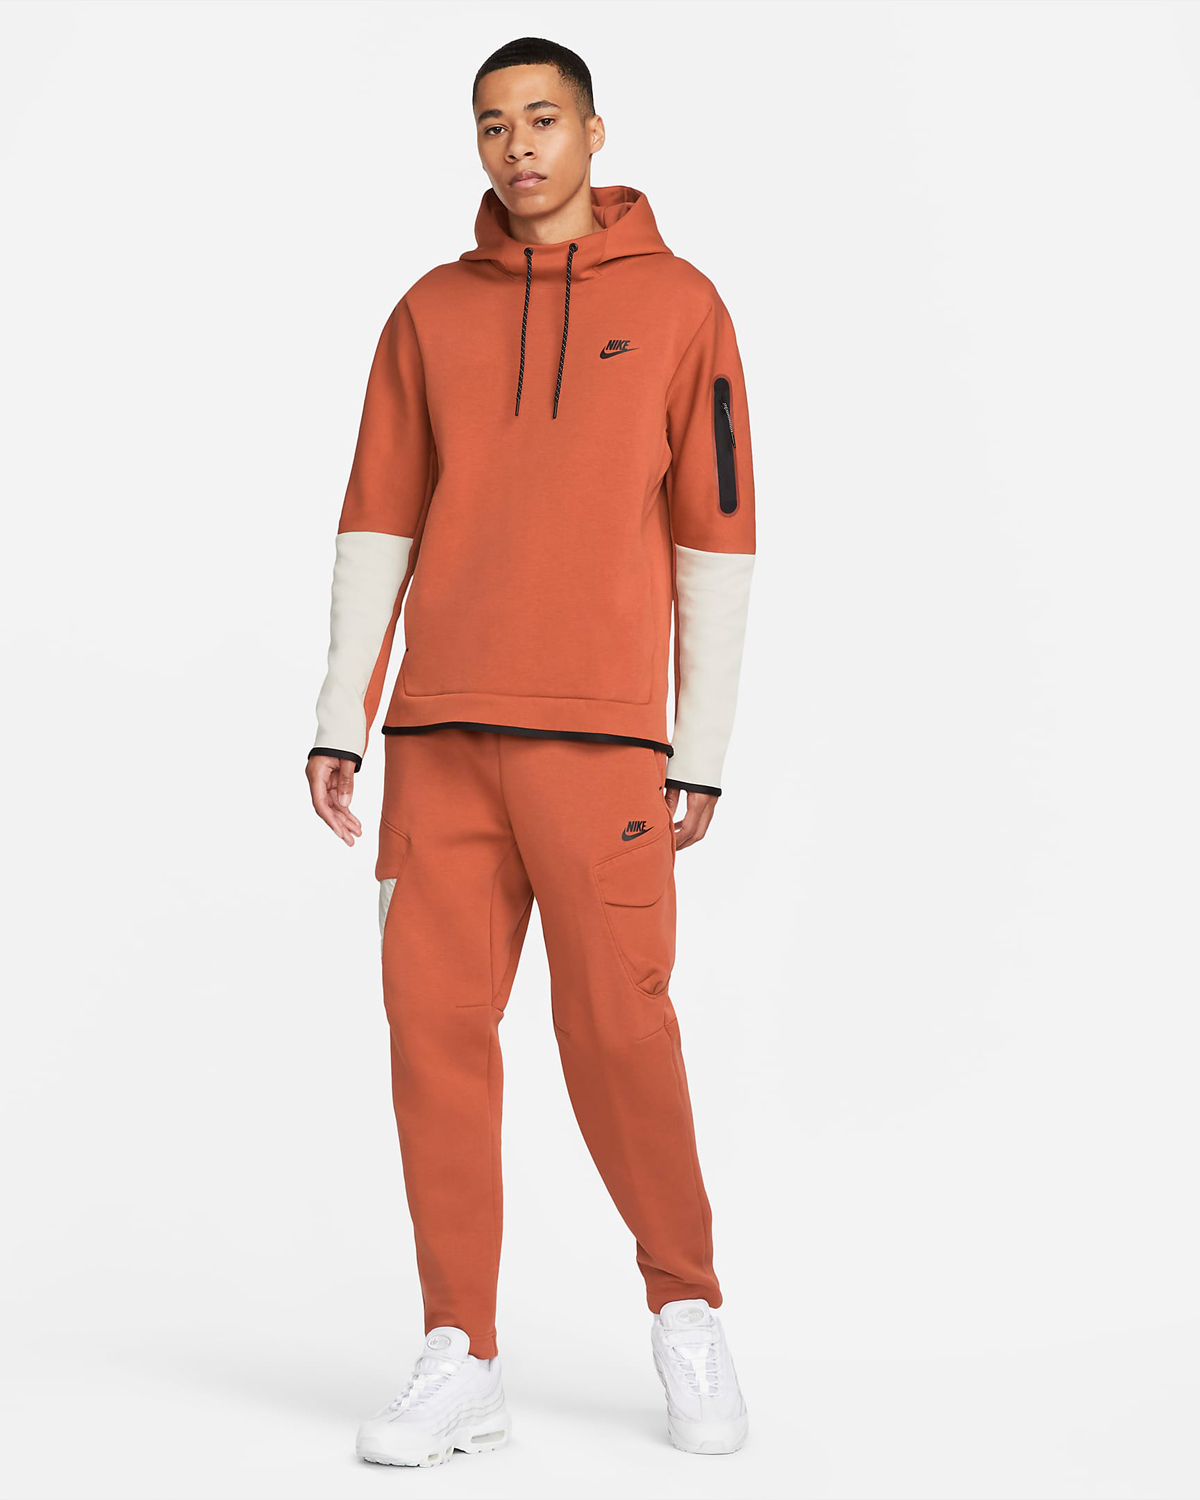 Nike Tech Fleece Clothing Burnt Sunrise Hoodies Pants Shorts